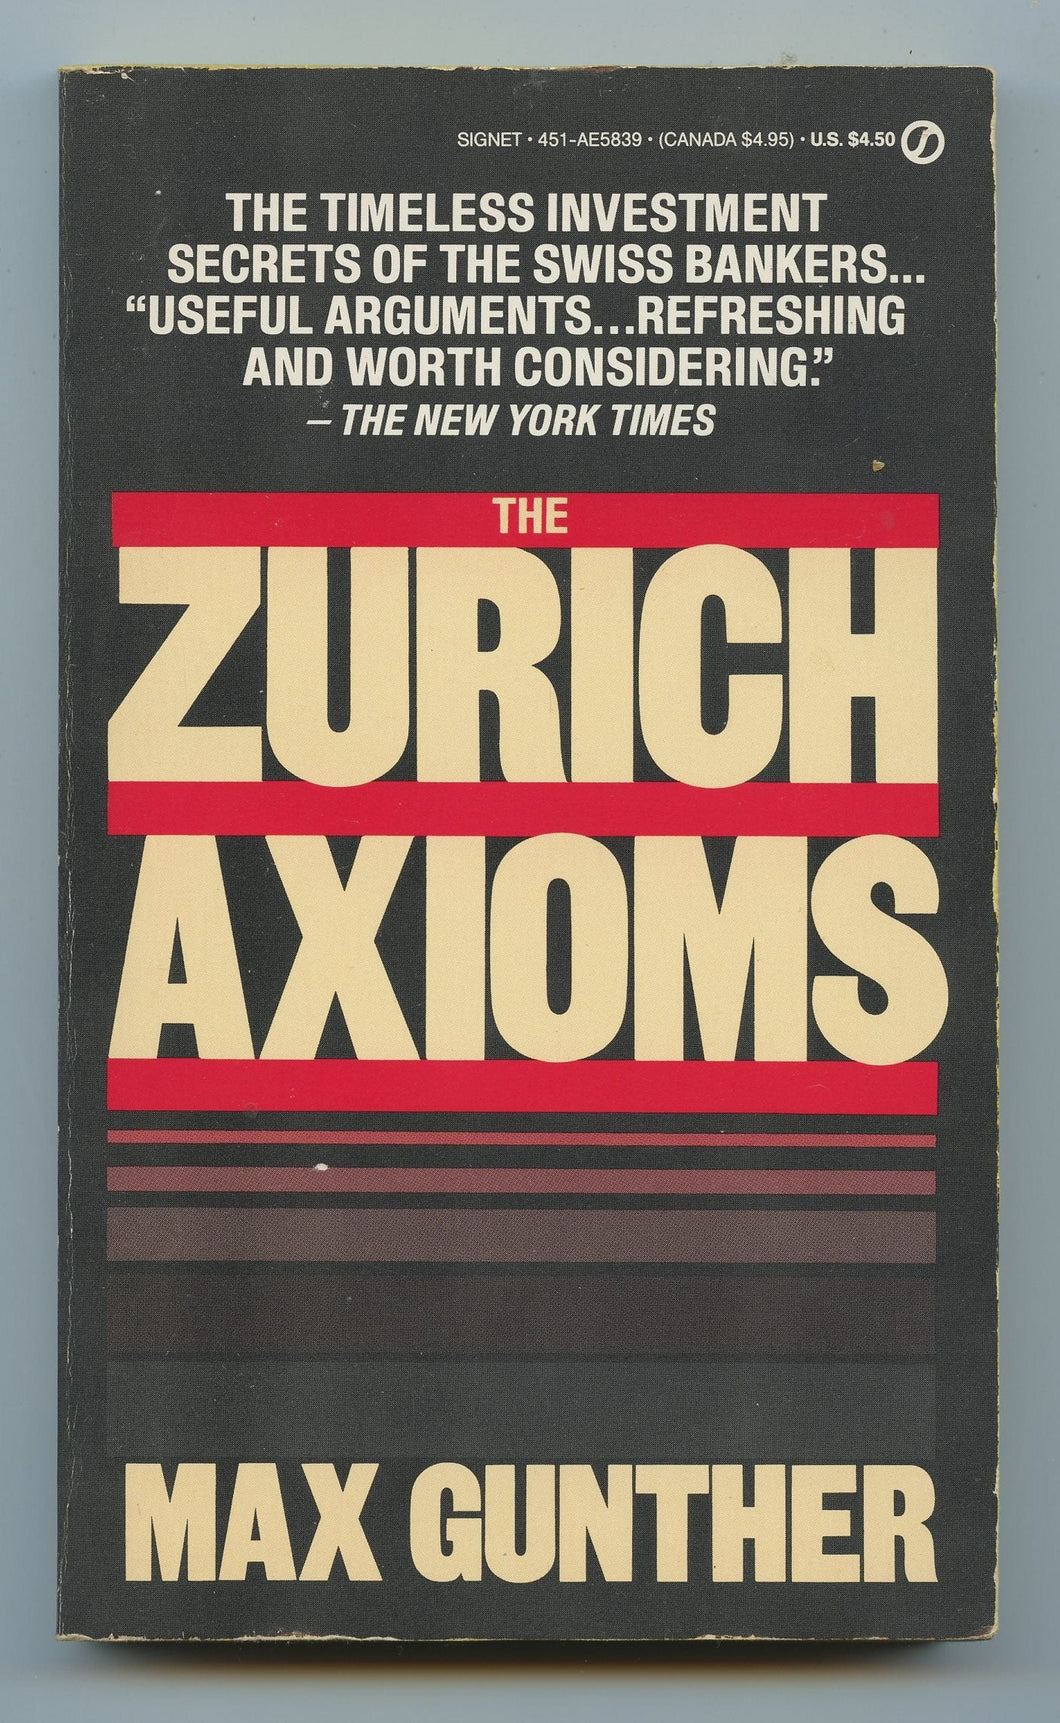 The Zurich Axioms